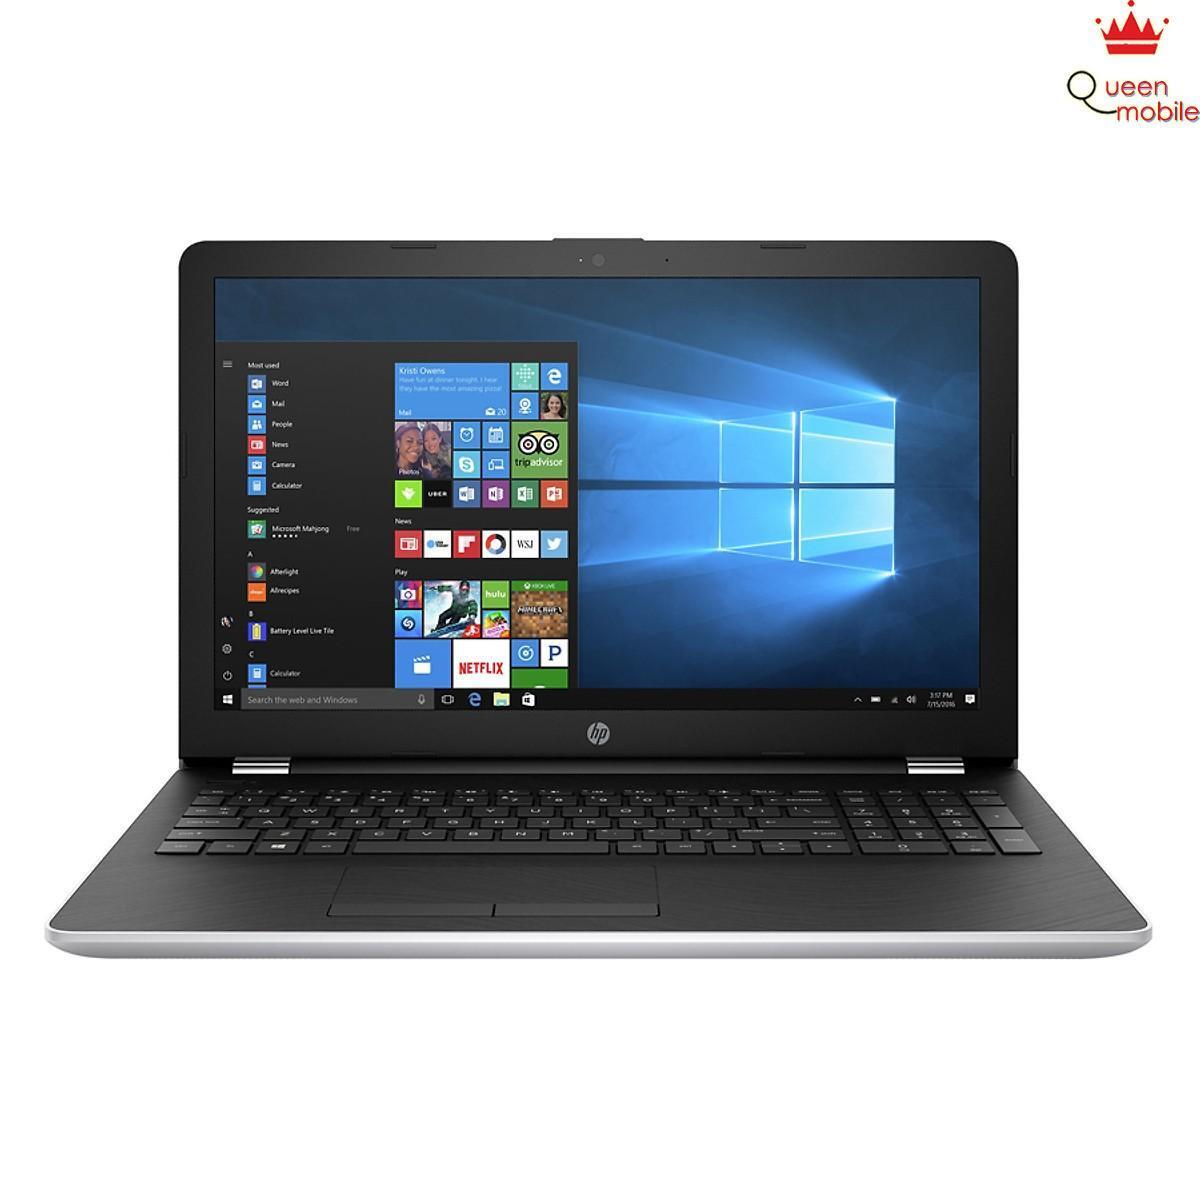 Laptop HP 15-da1022TU 5NK80PA - Intel core i5-8265U, 4GB RAM, HDD 1TB, Intel UHD Graphics 620, 15.6 inch